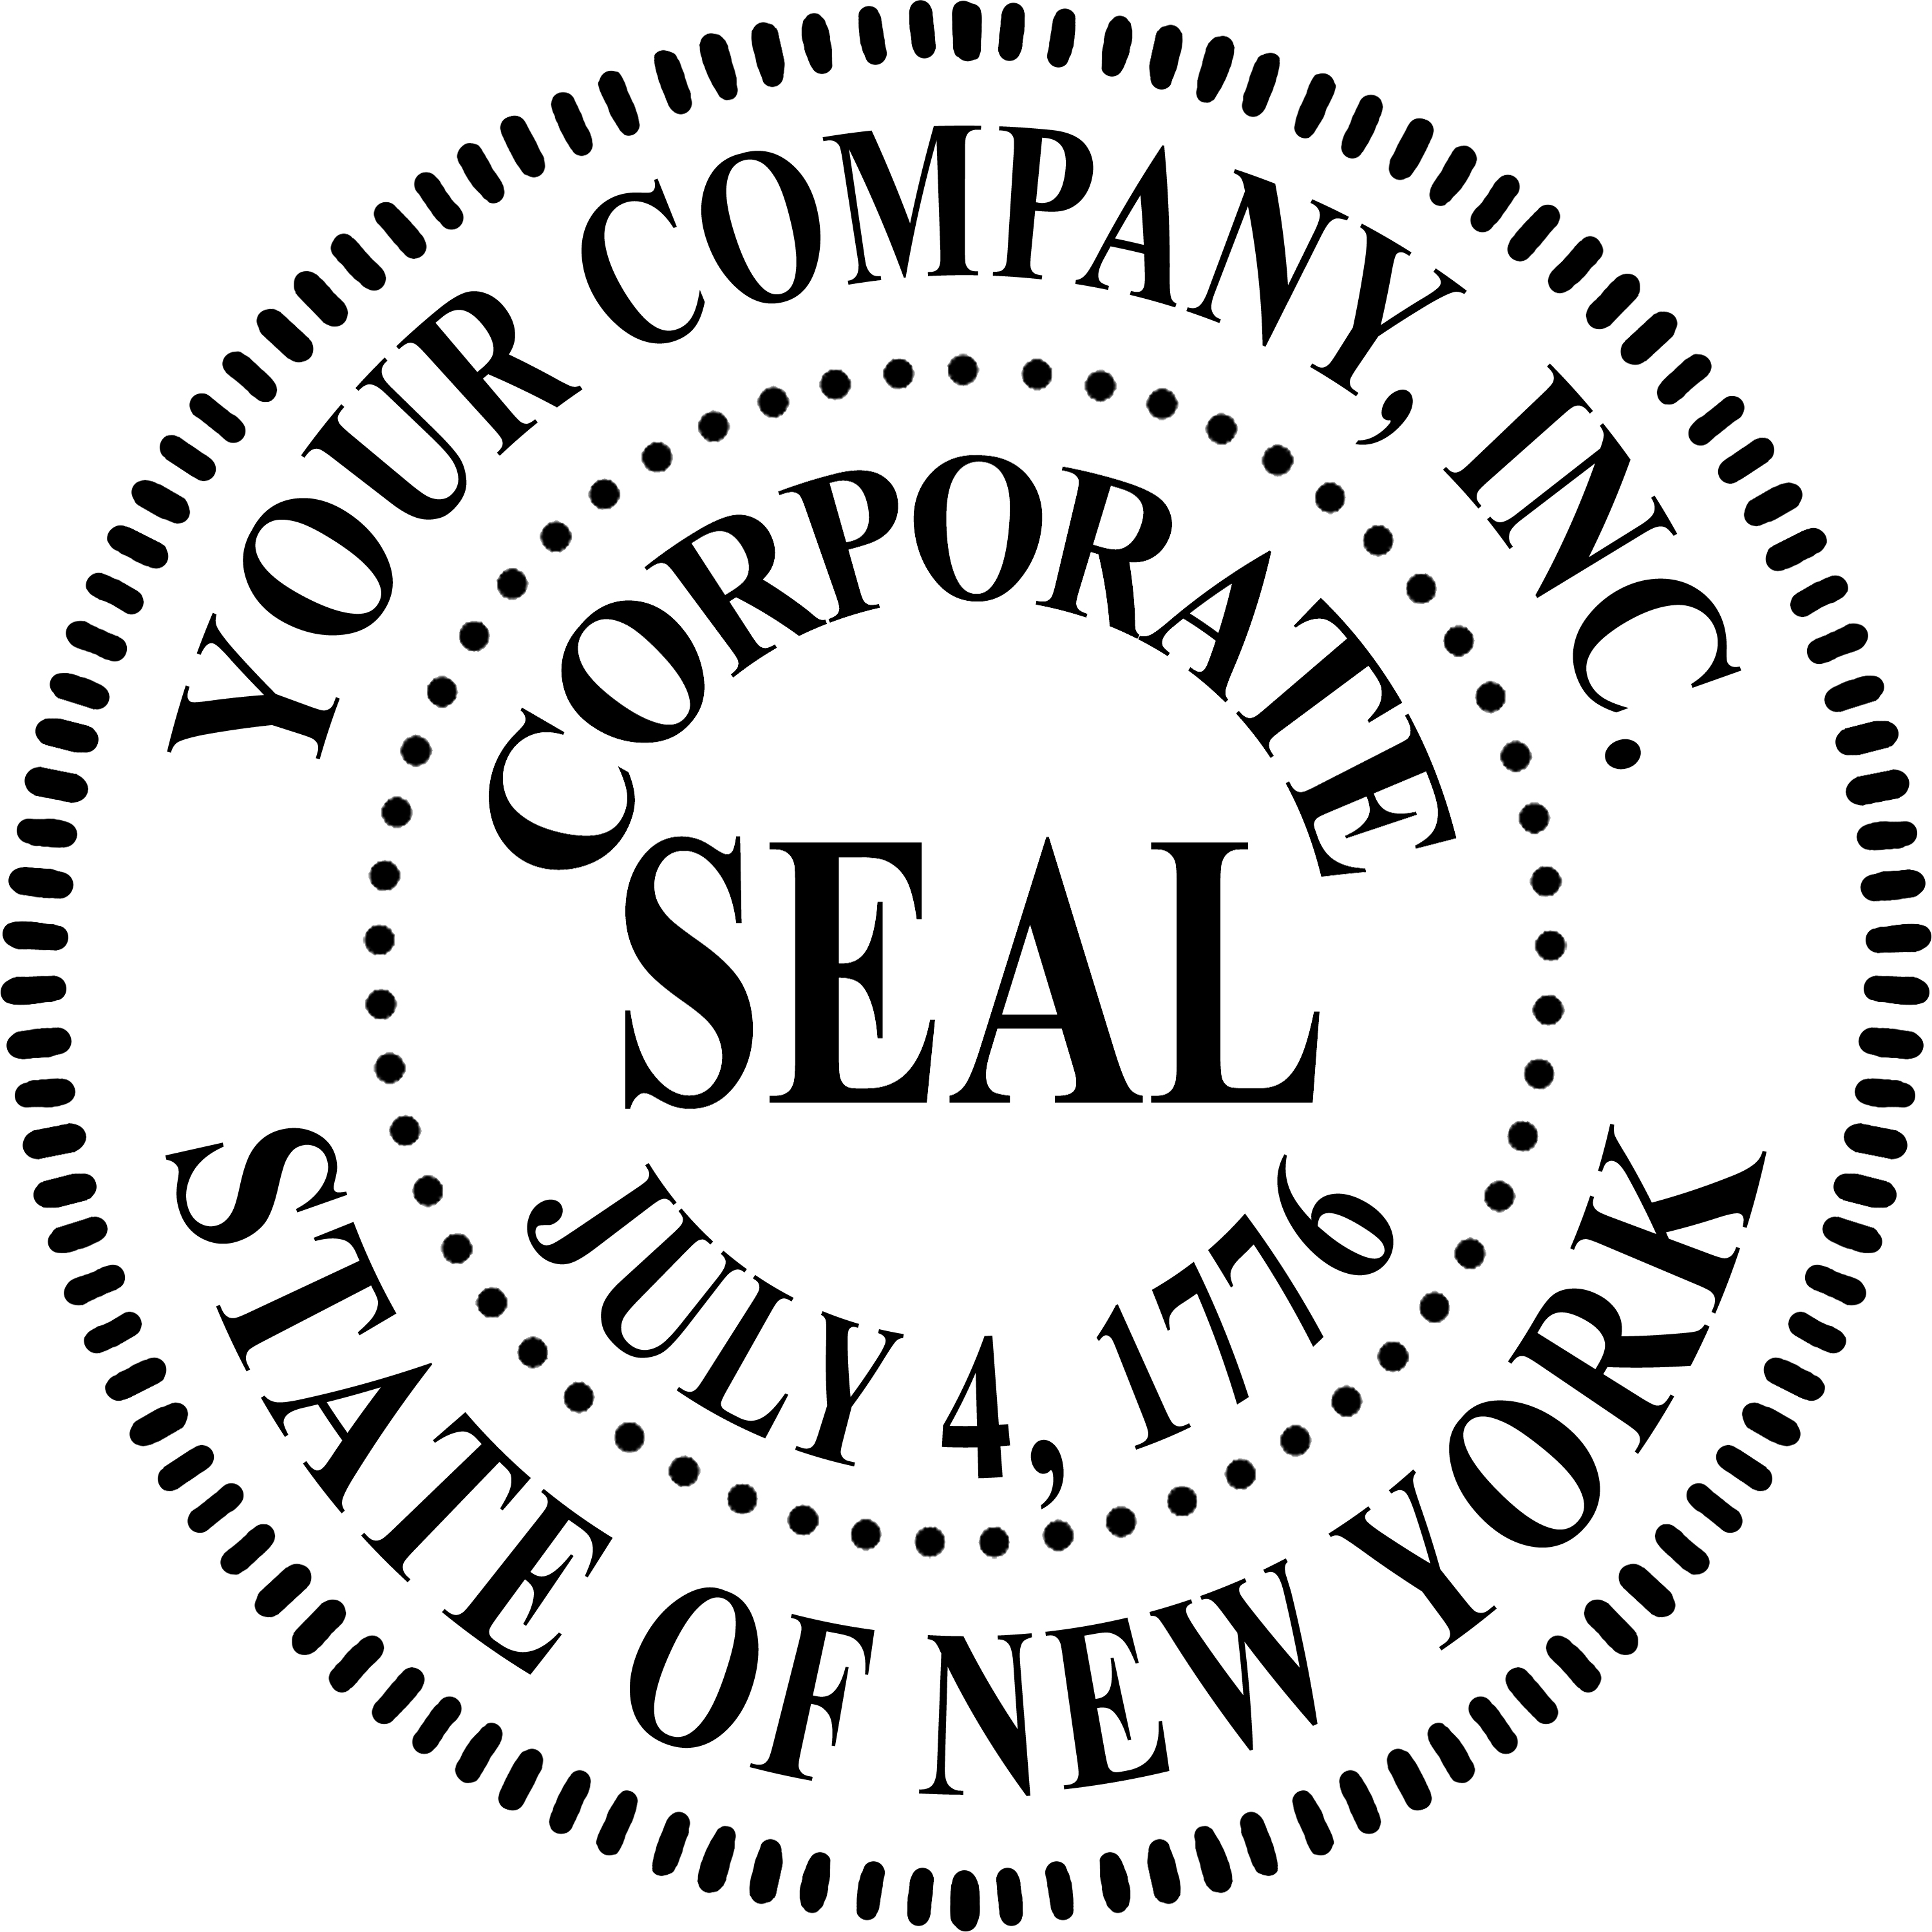 WRITING COMPANY Logo Template photo - 1